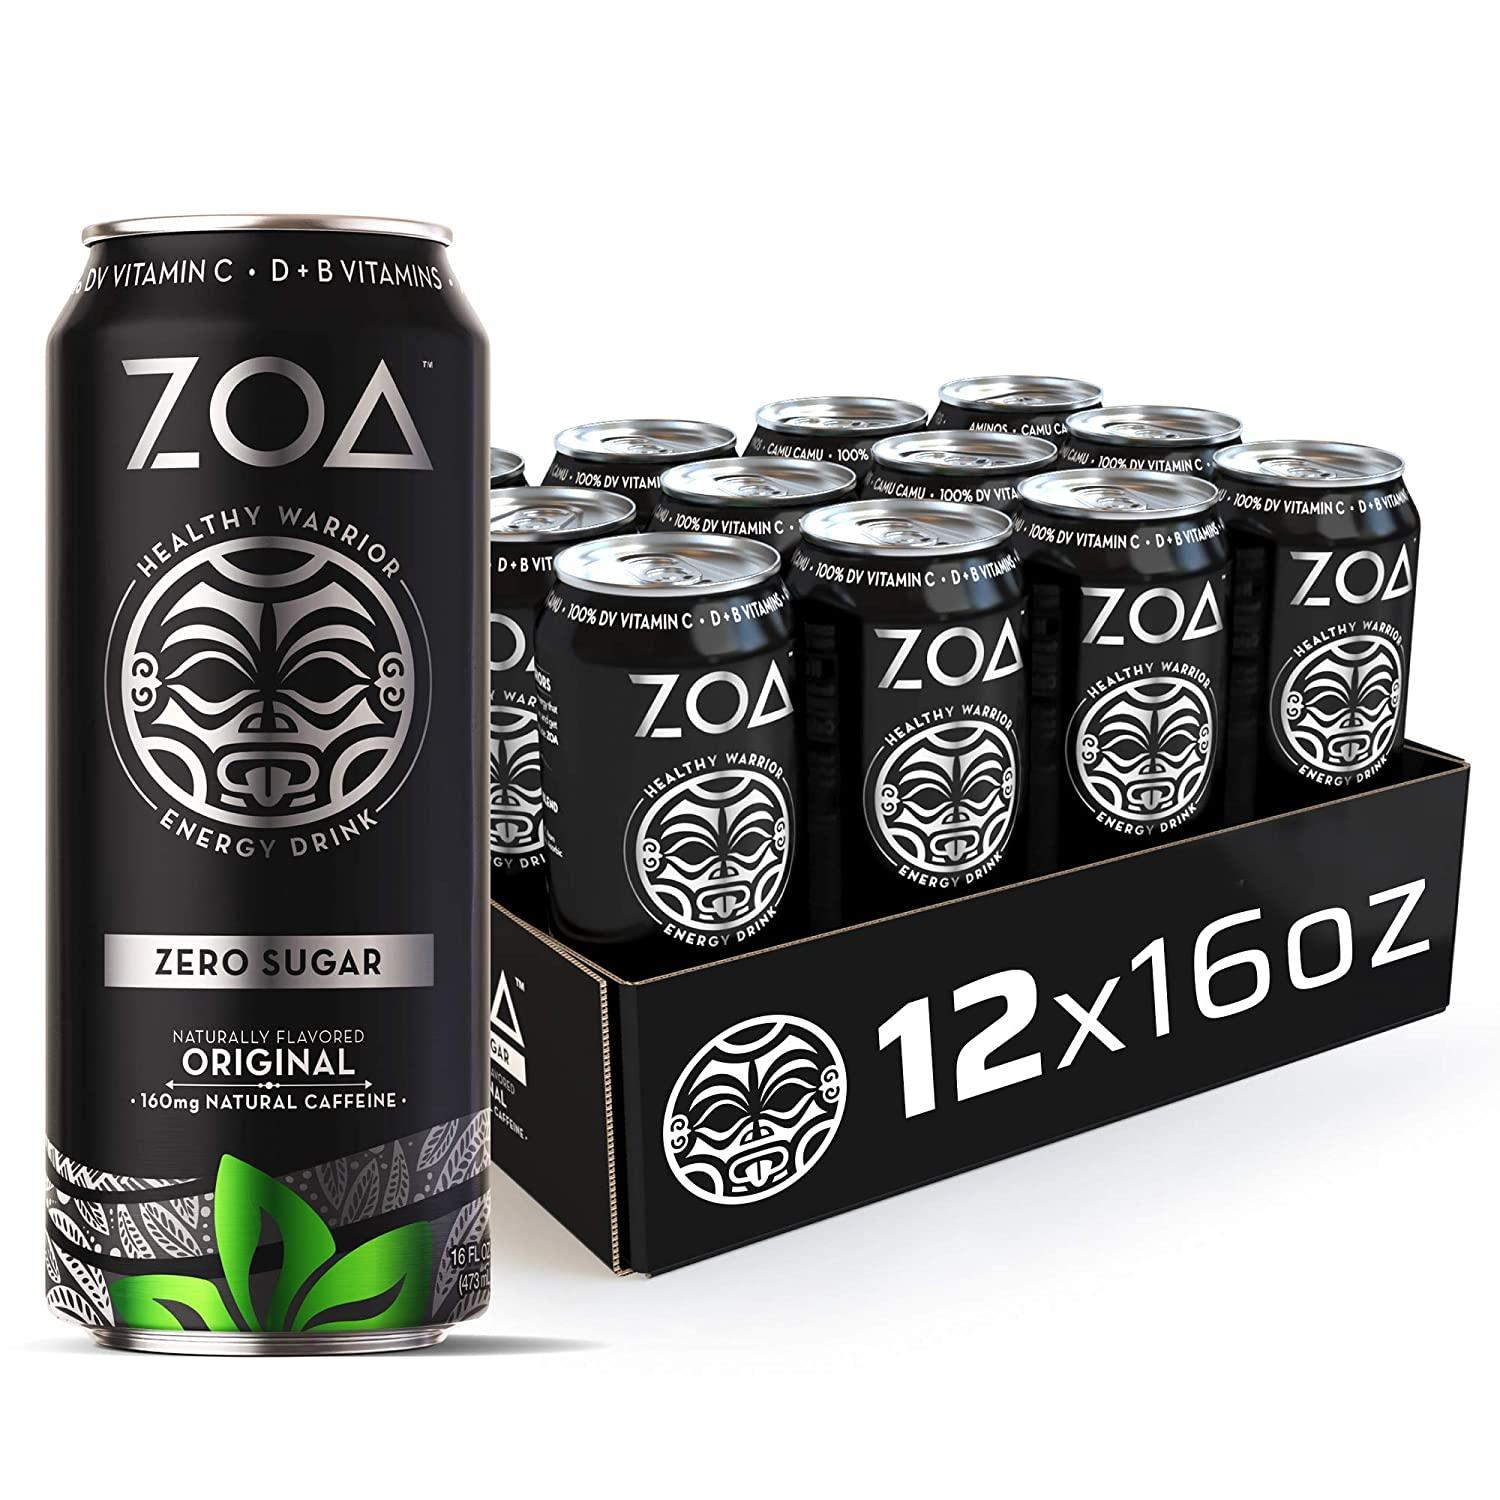 12 ZOA Zero Sugar Energy Drink for $14.23 Shipped